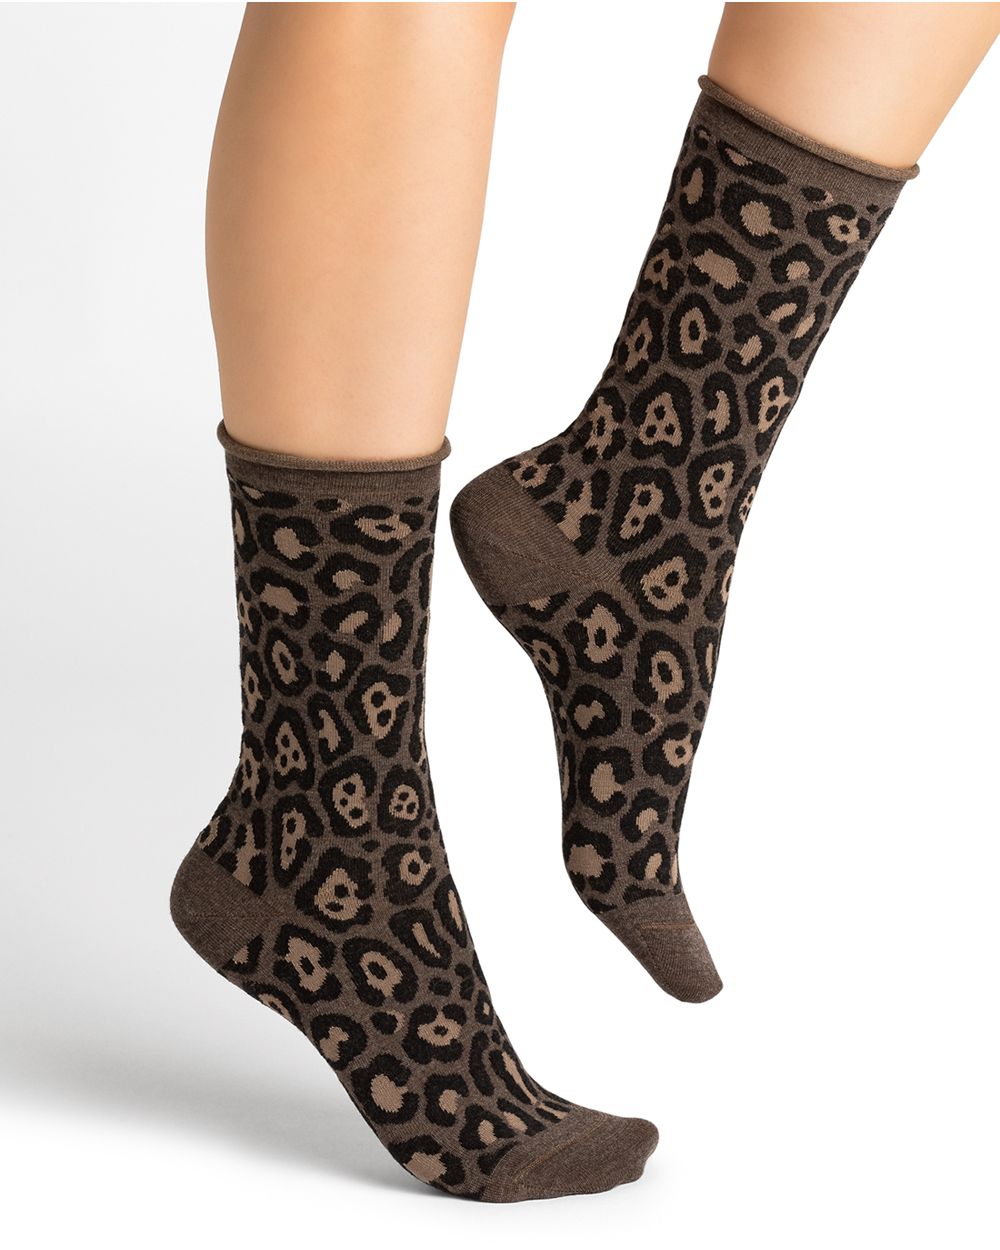 A woman's legs with Bleuforet black and grey leopard print merino wool socks.